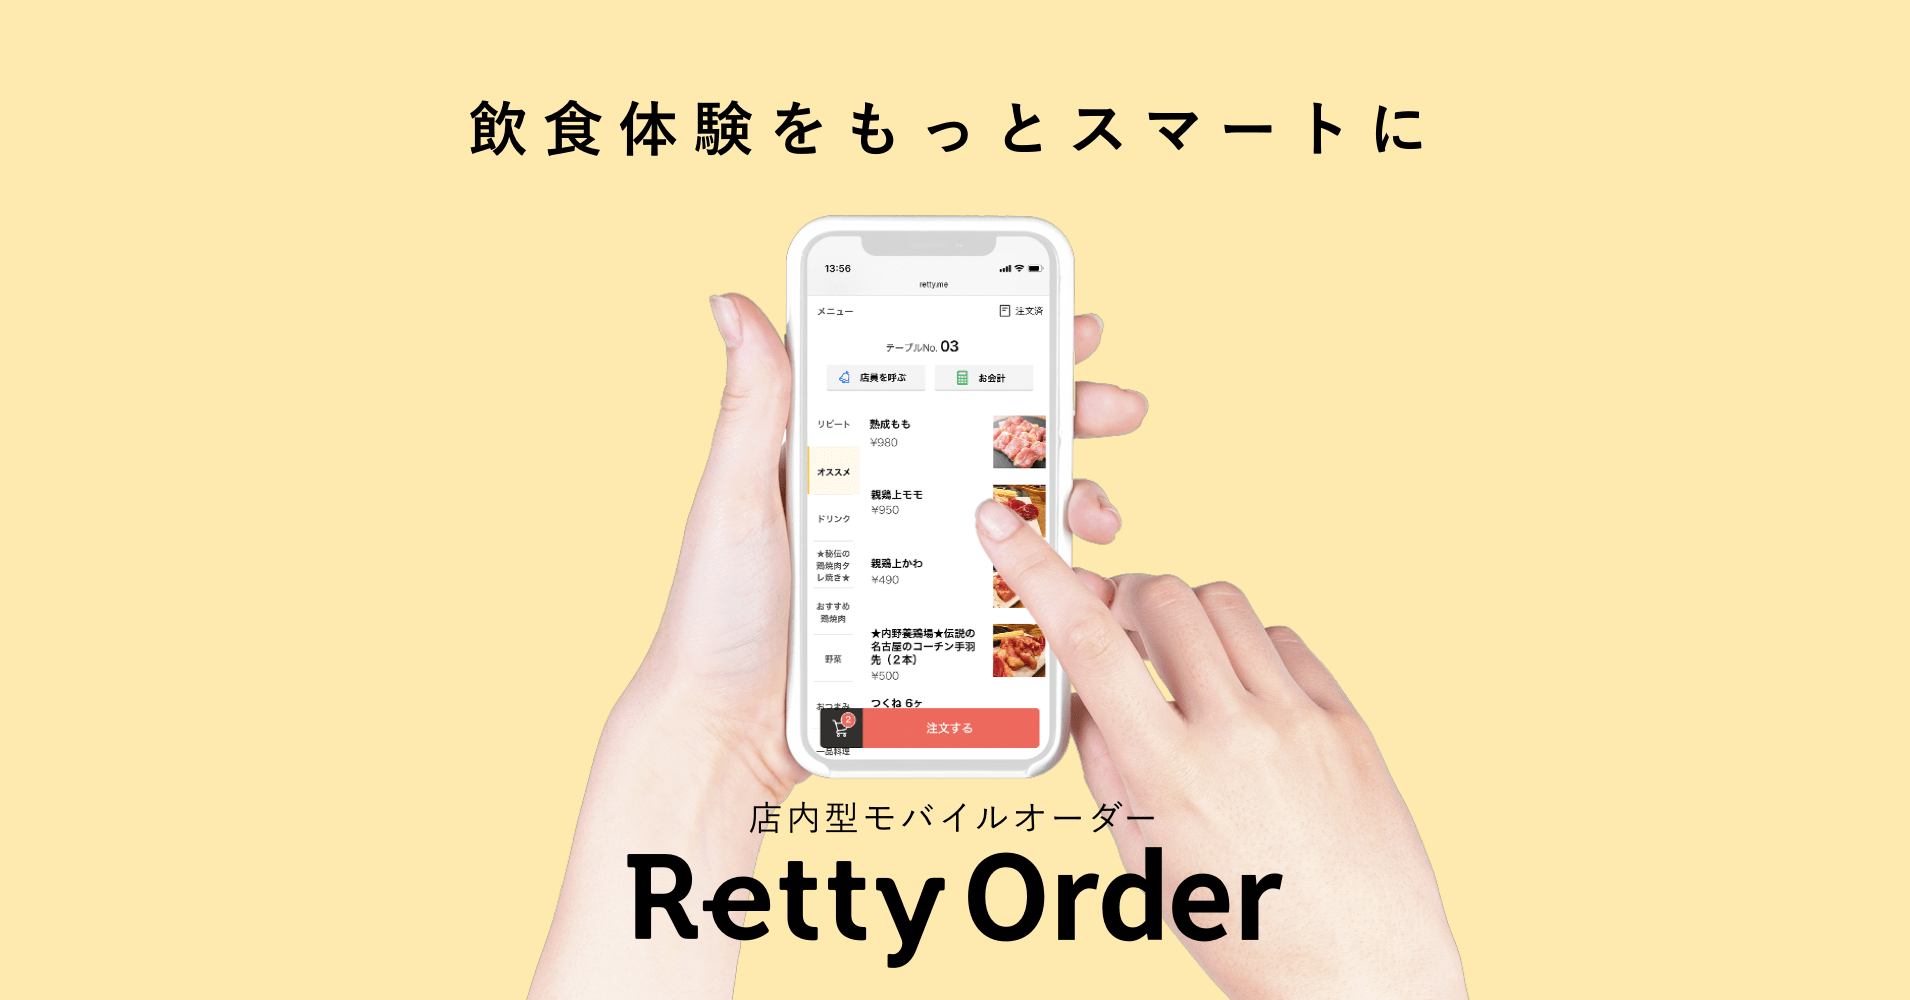 Rettyの新サービス「Retty Order」は店舗型のモバイルオーダーシステムだ